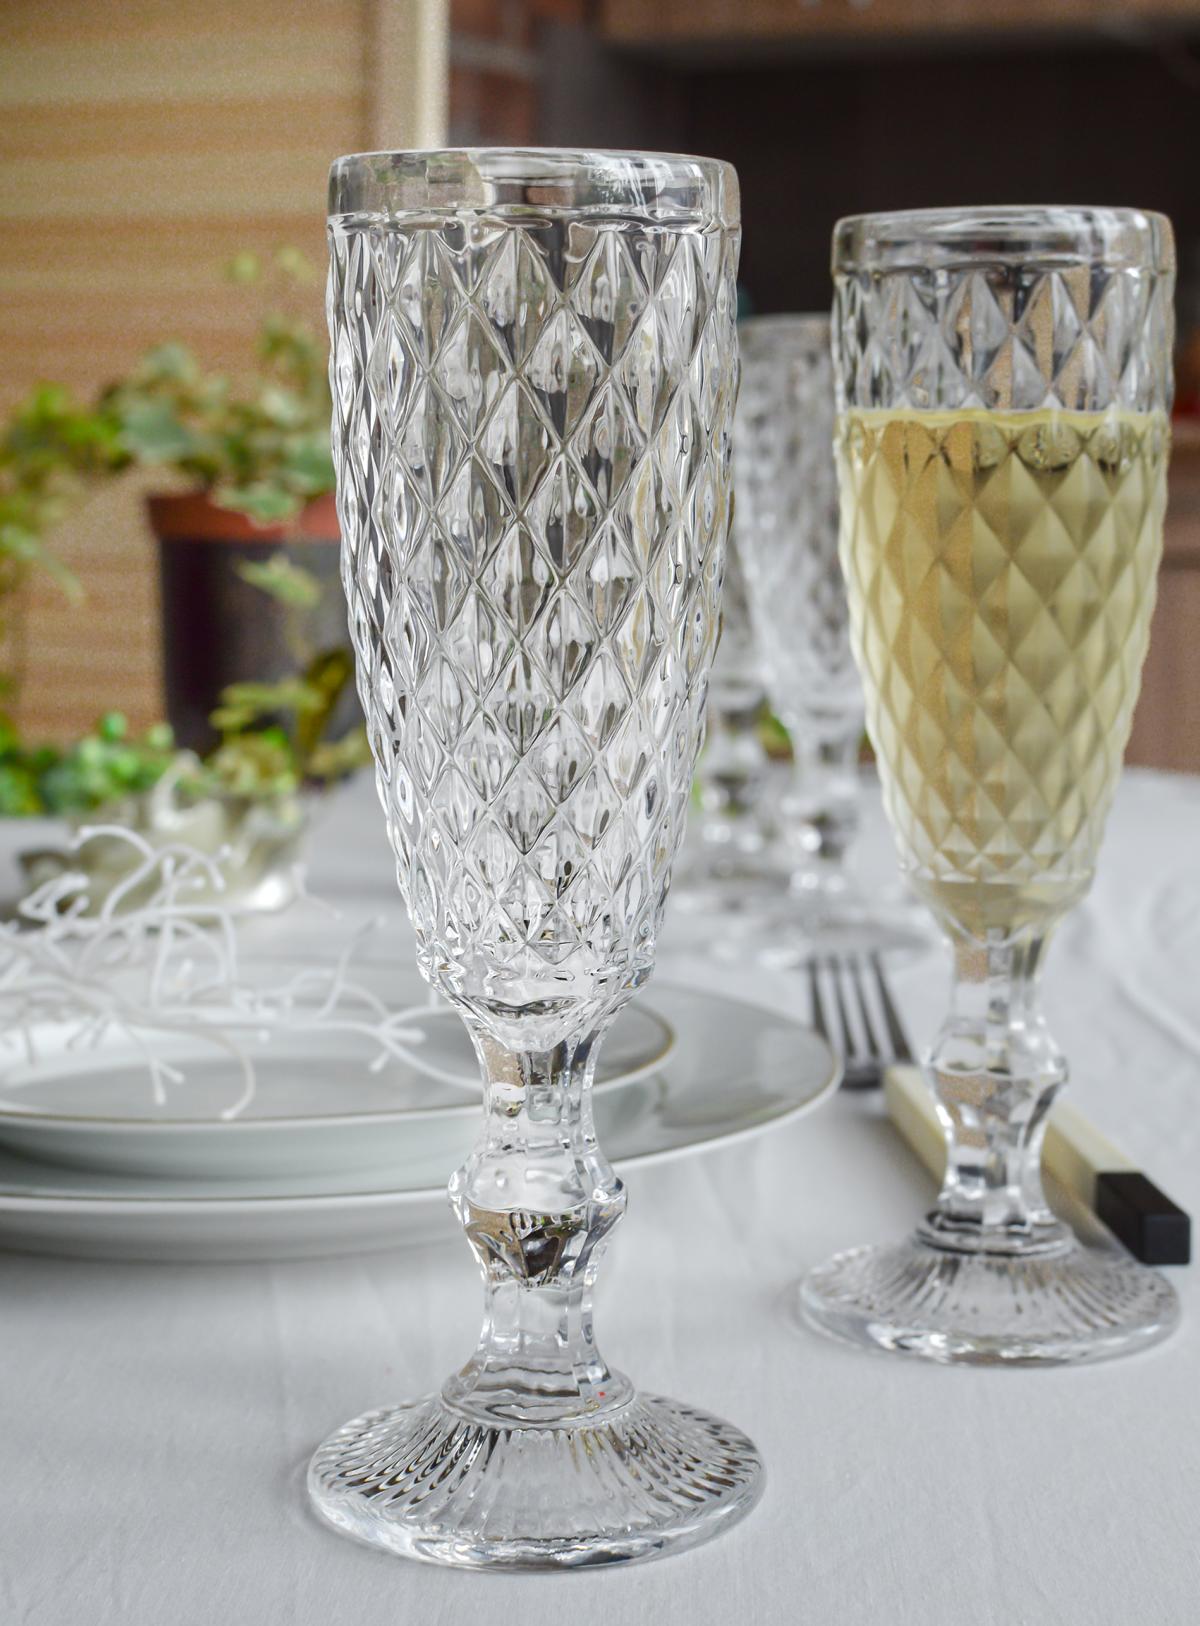 6 Sektgläser 150ml auf Fuß Sektkelche Champagner Prosecco Sektglas Proseccoglas